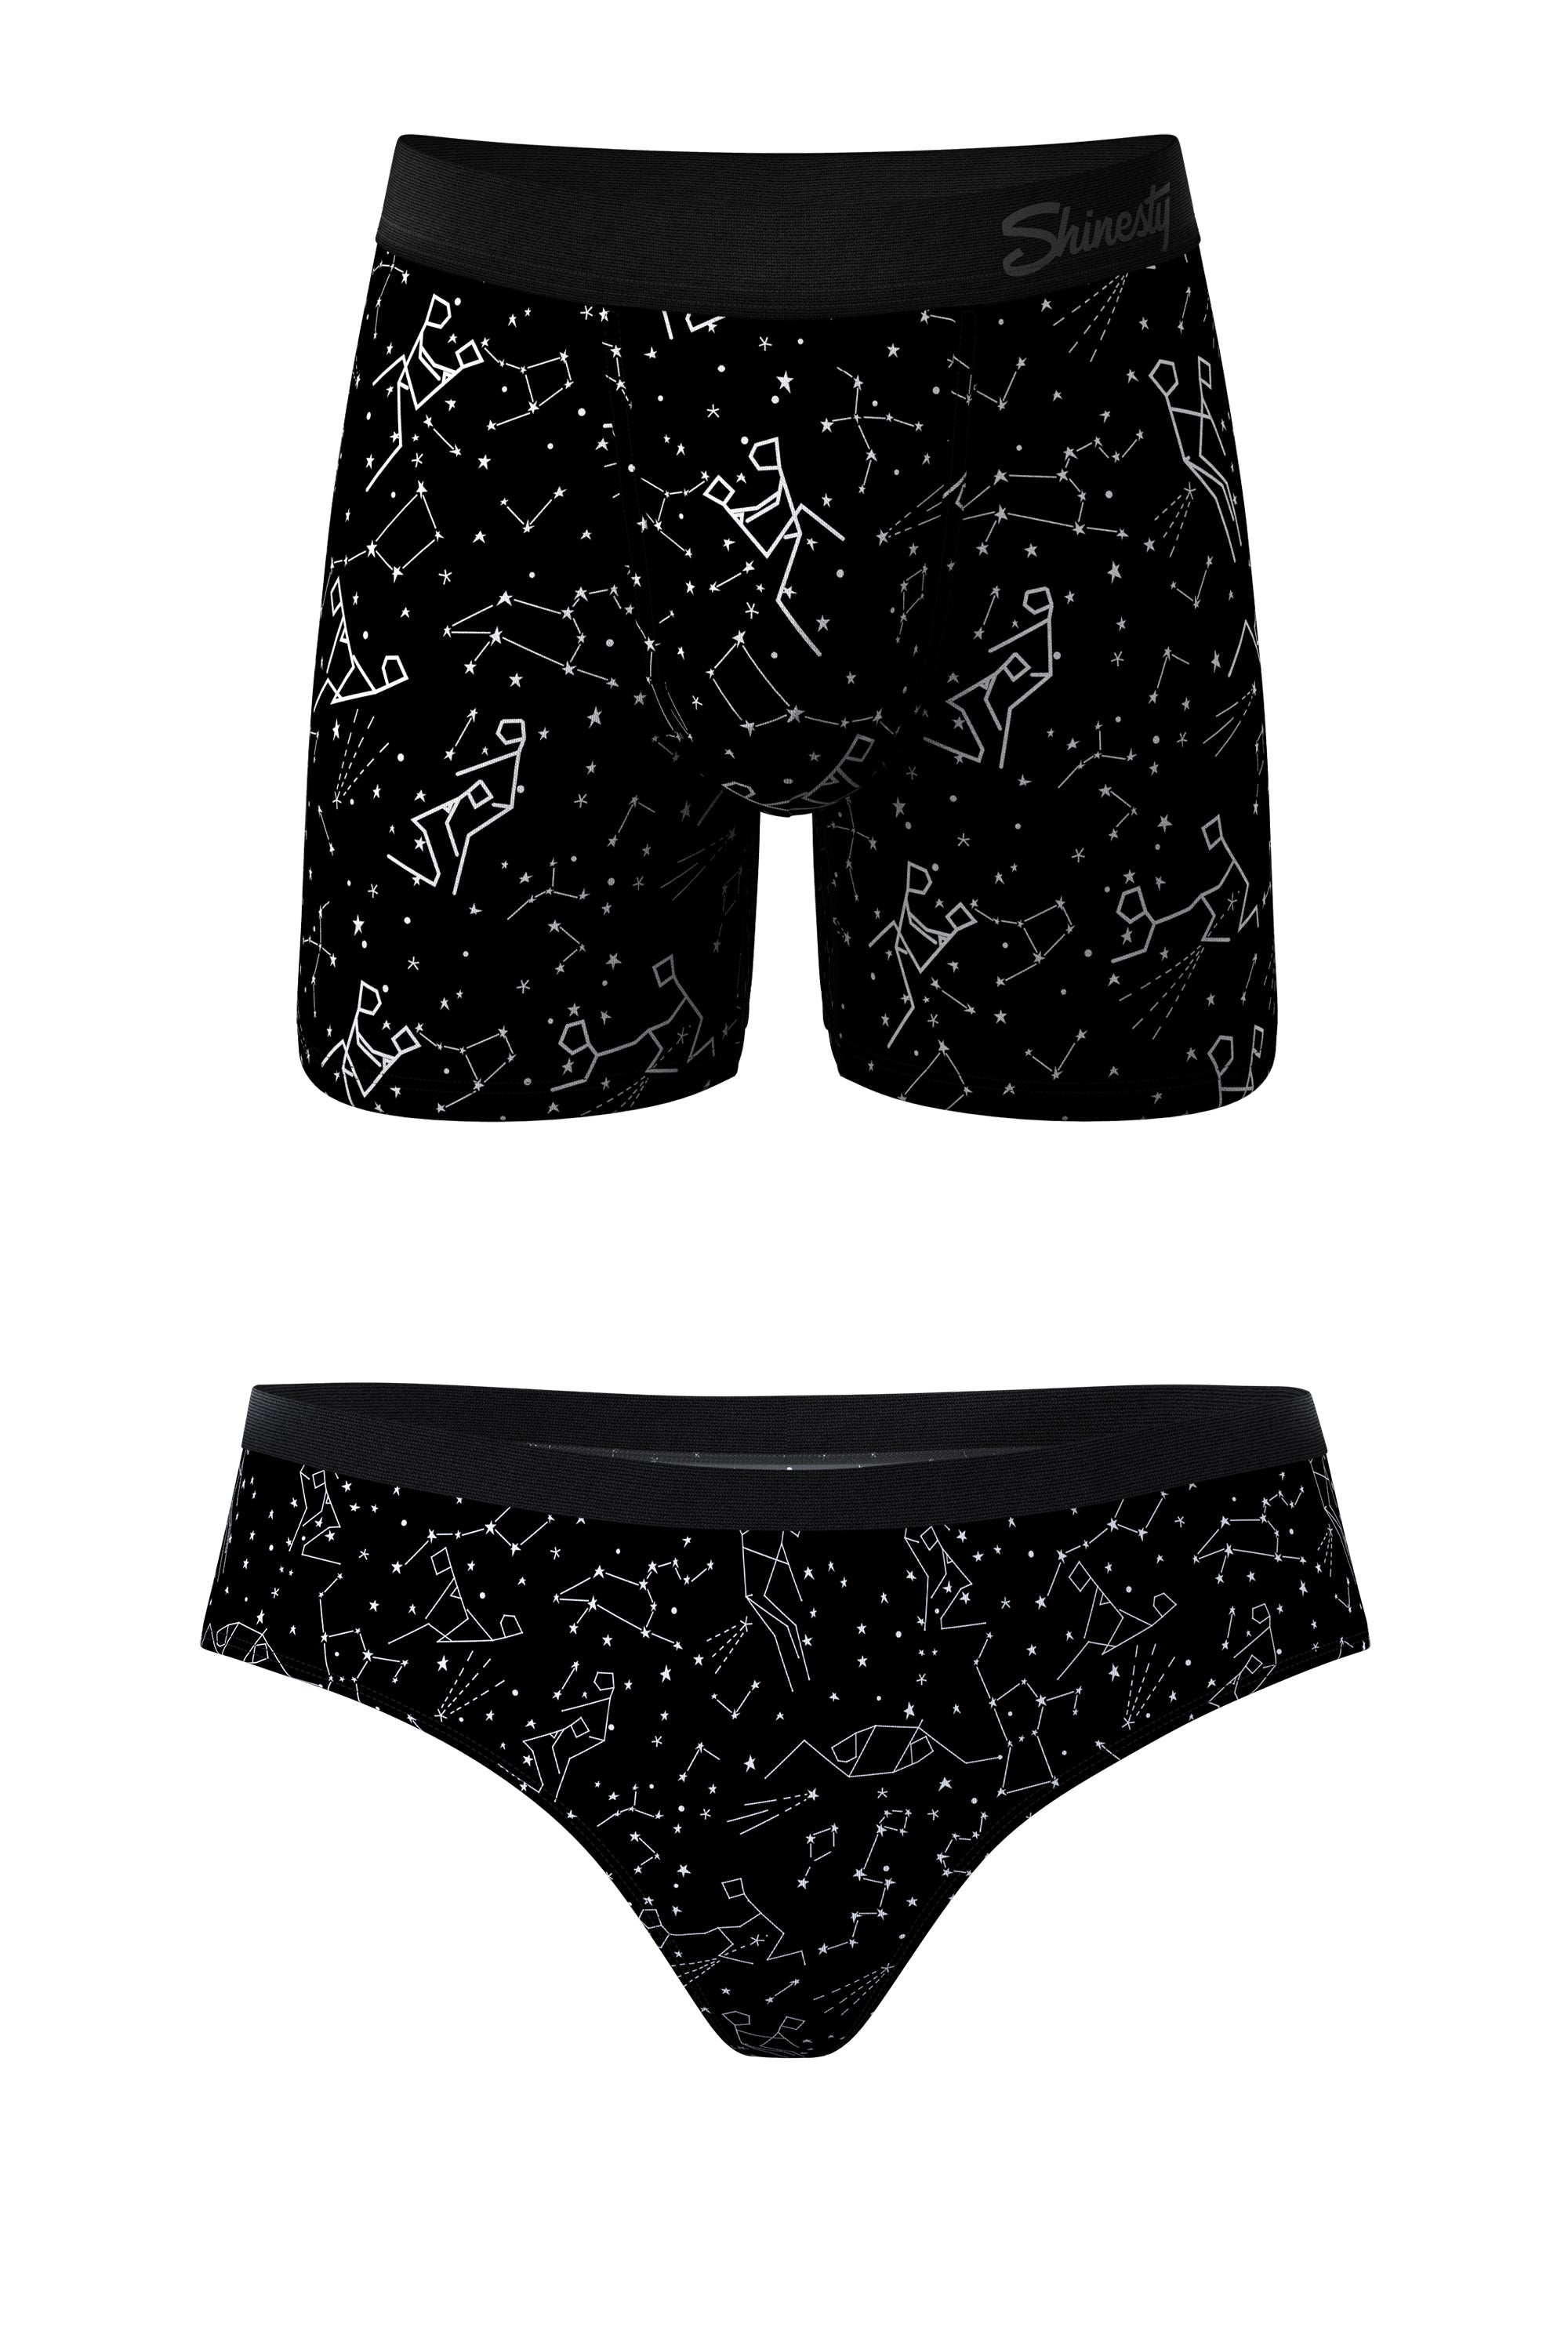 The Big Bang | Constellation Ball Hammock® Boxer and Cheeky Matching  Underwear Pack